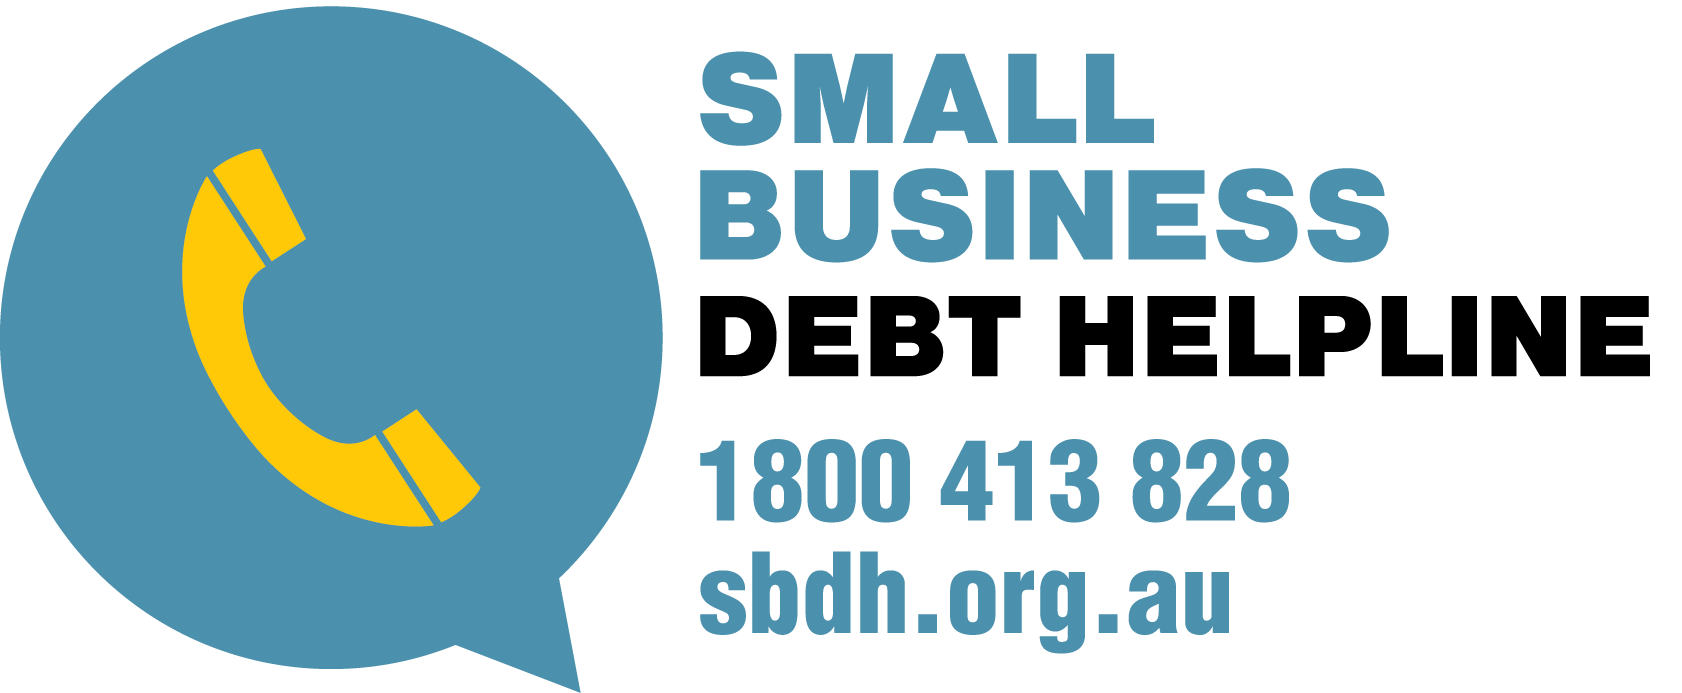 Small Business Debt Helpline logo